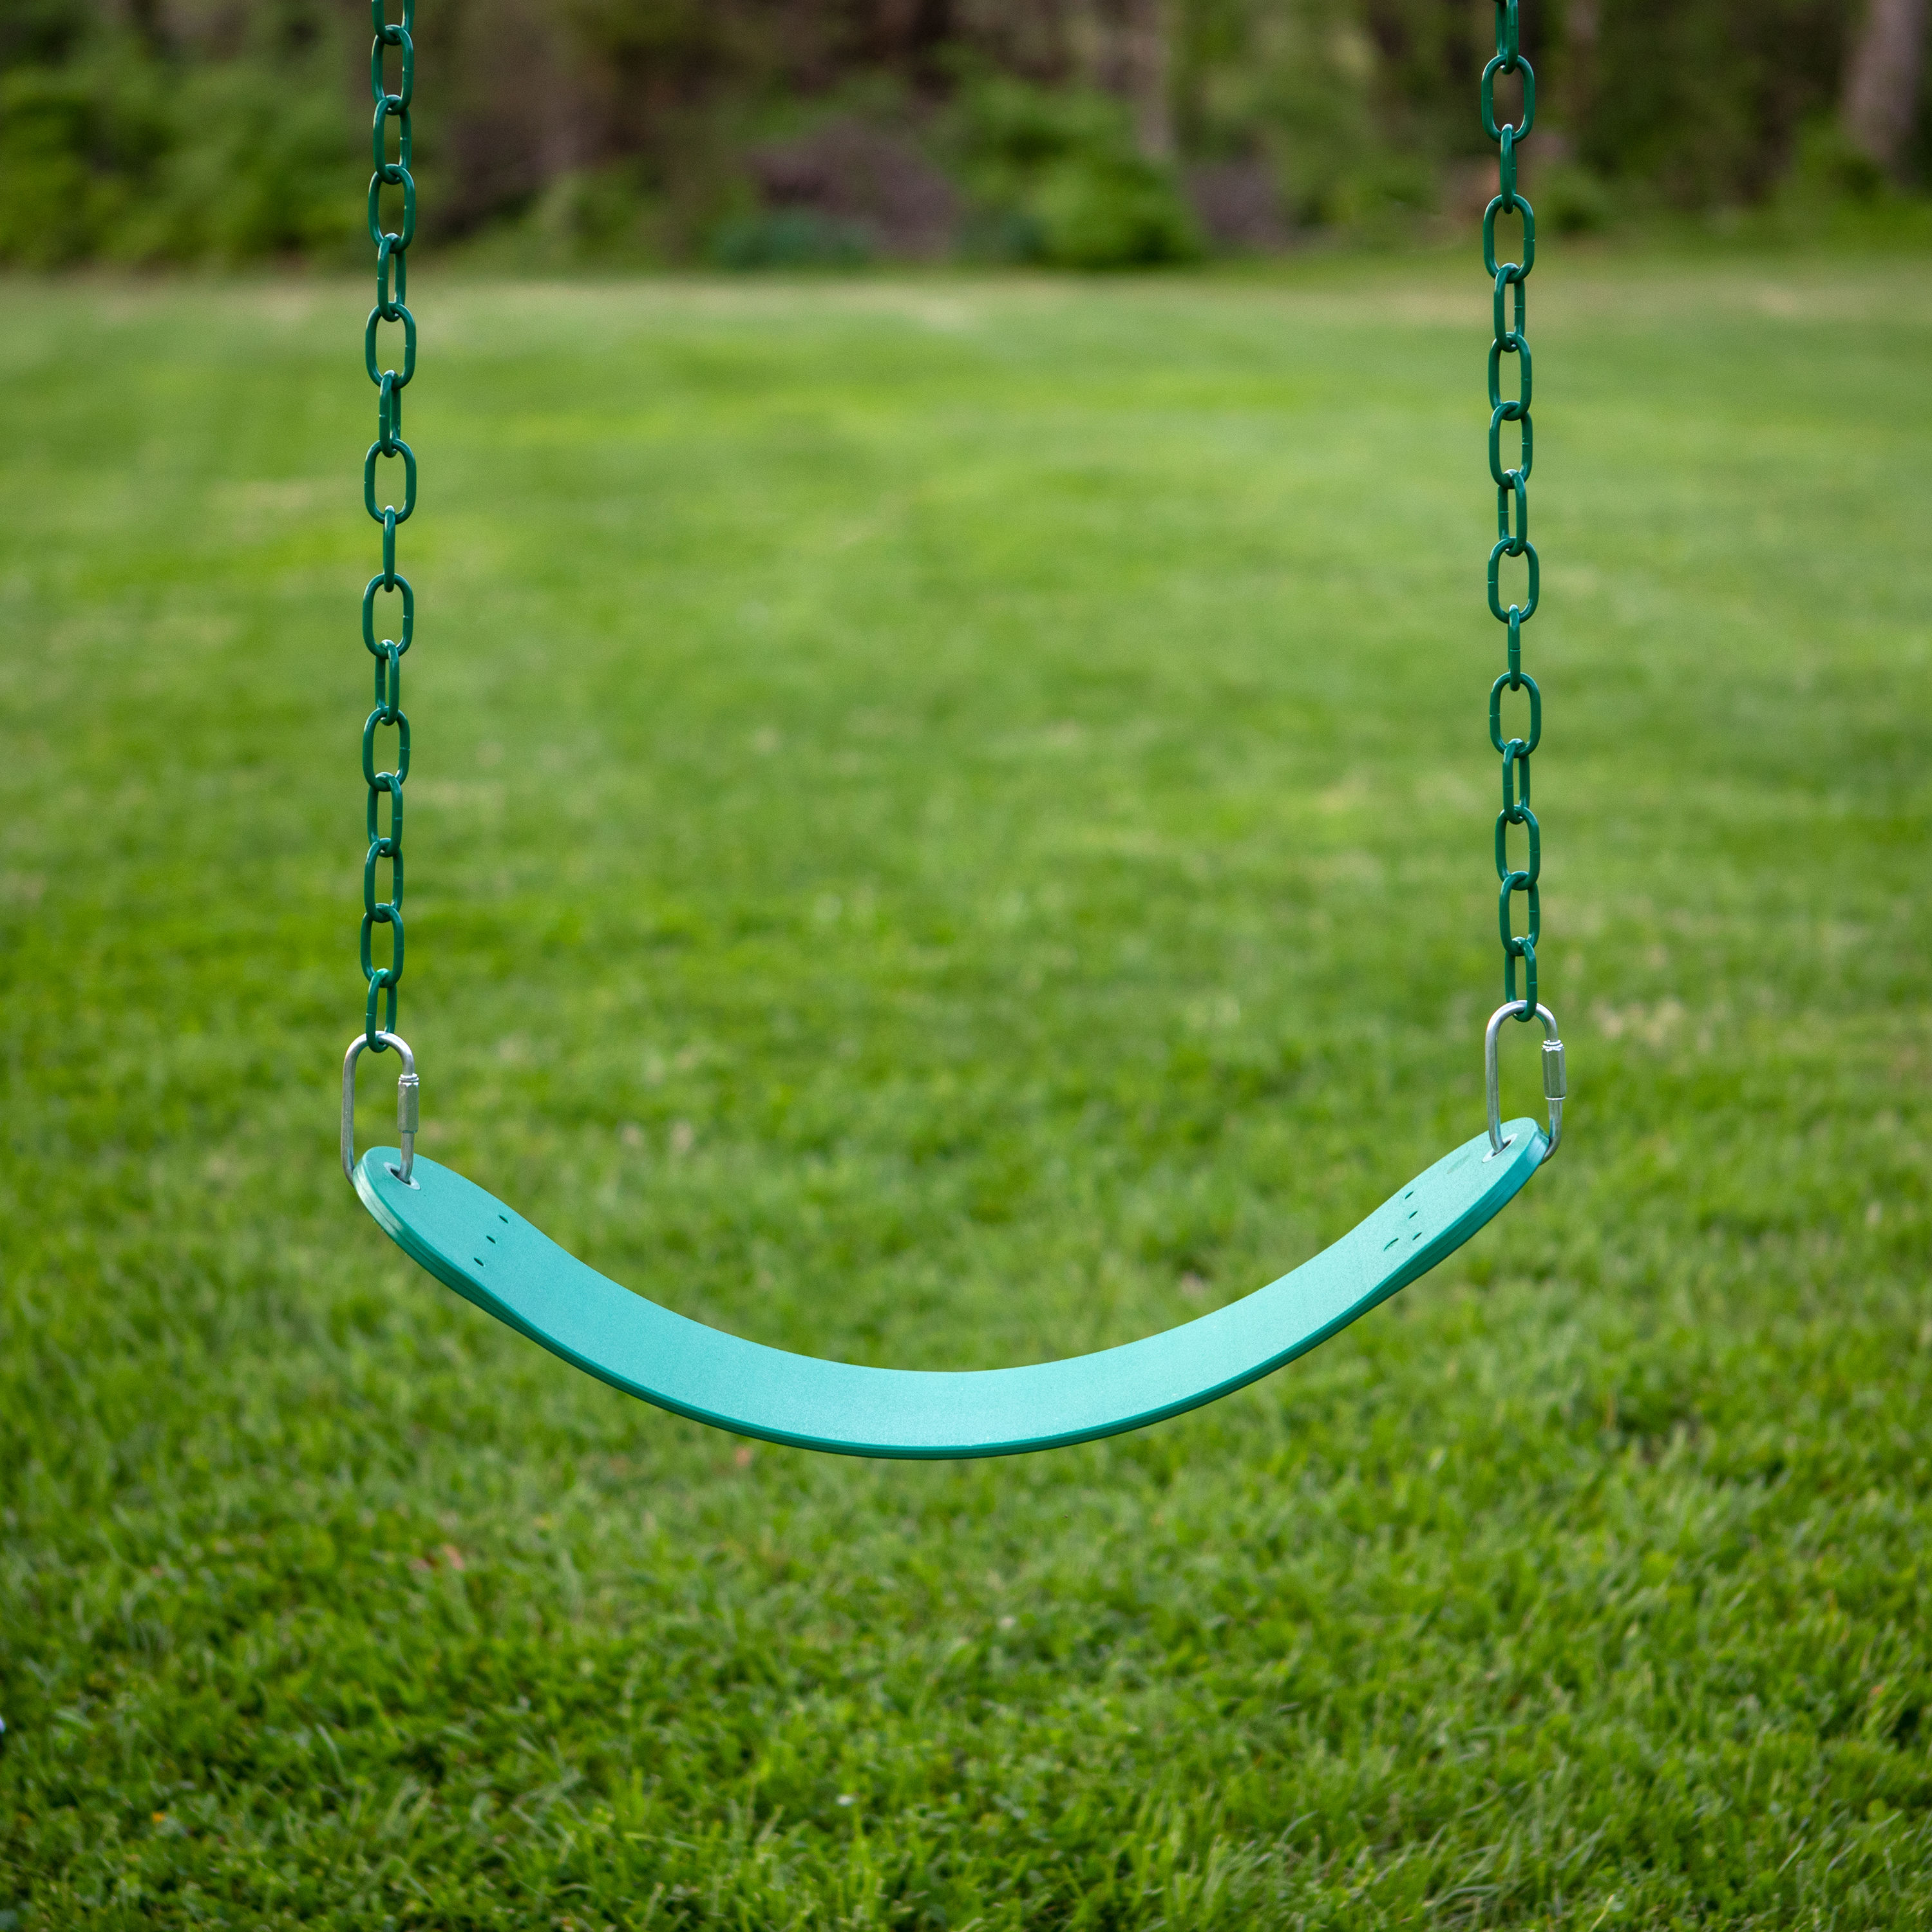 Swingset swing,play set,chained belt swing seat,playground accessory,kit,pvc,Grn 